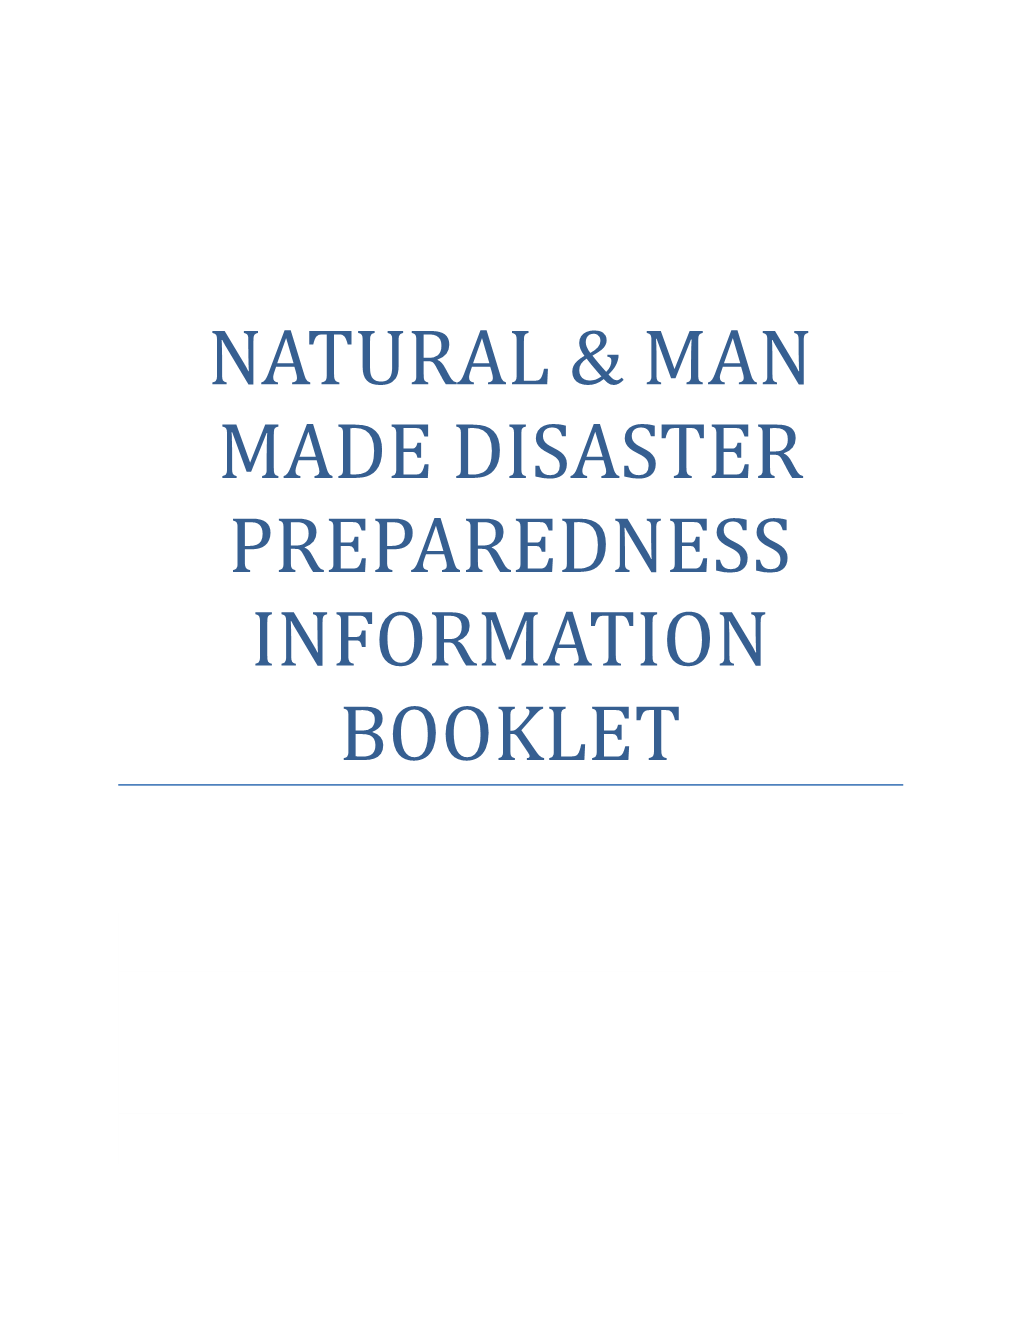 Natural & Man Made Disaster Preparedness Information